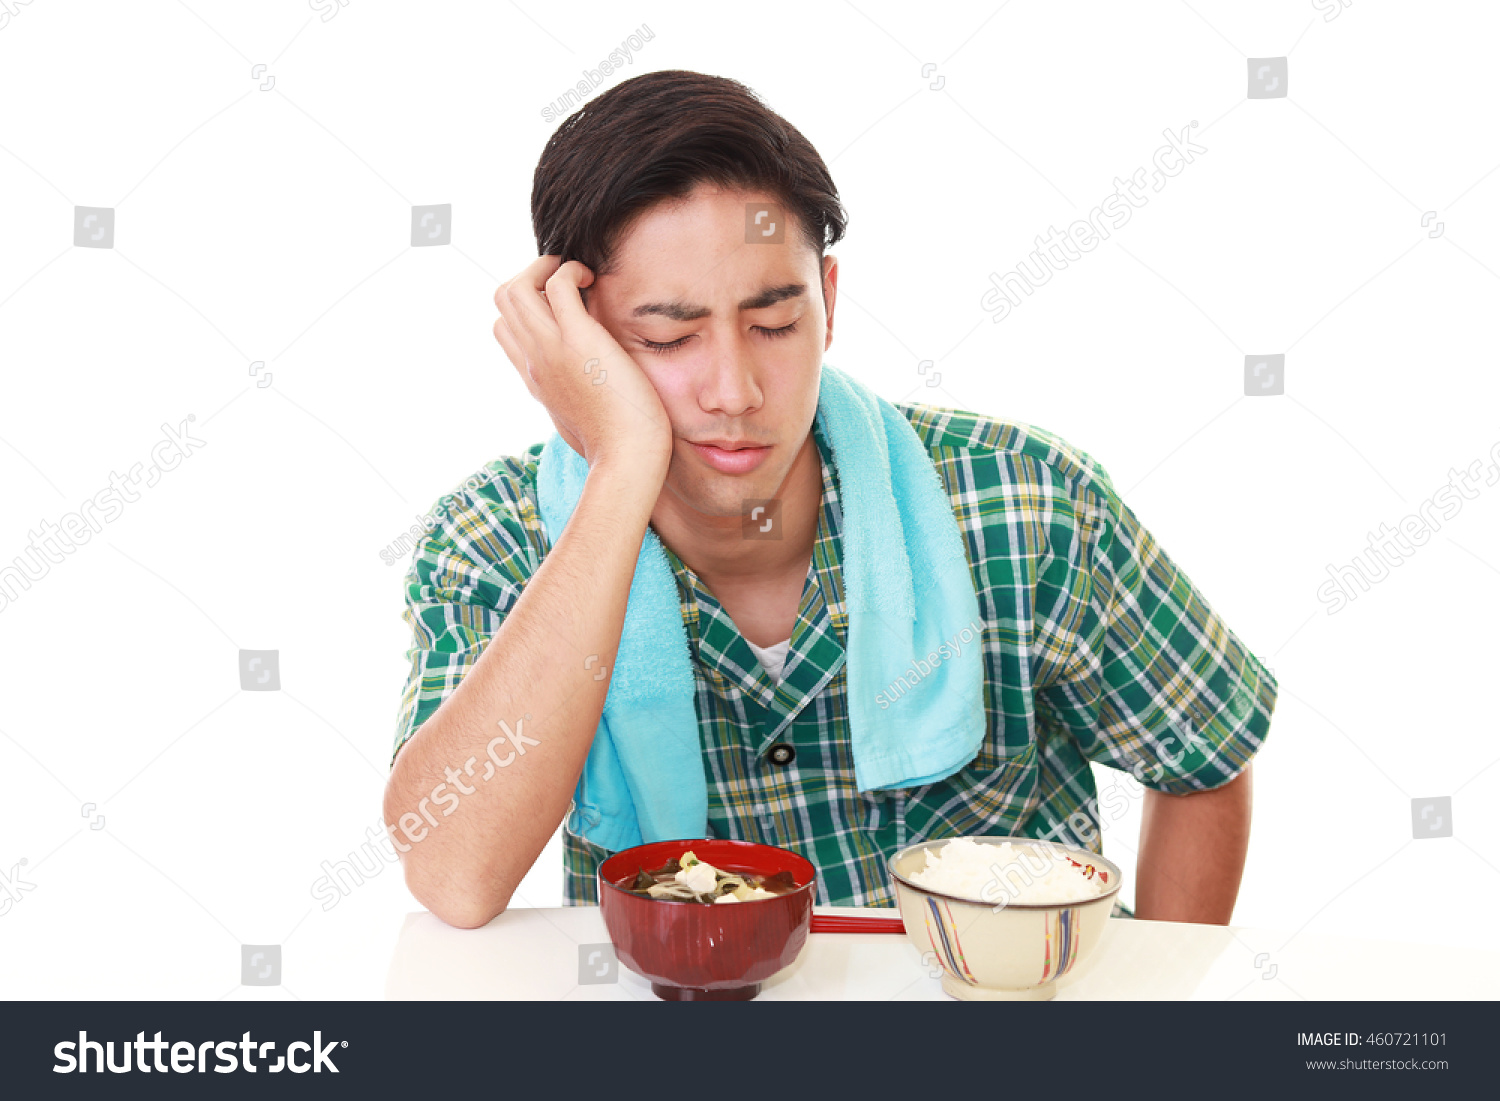 Man Has No Appetite Stock Photo 460721101 : Shutterstock